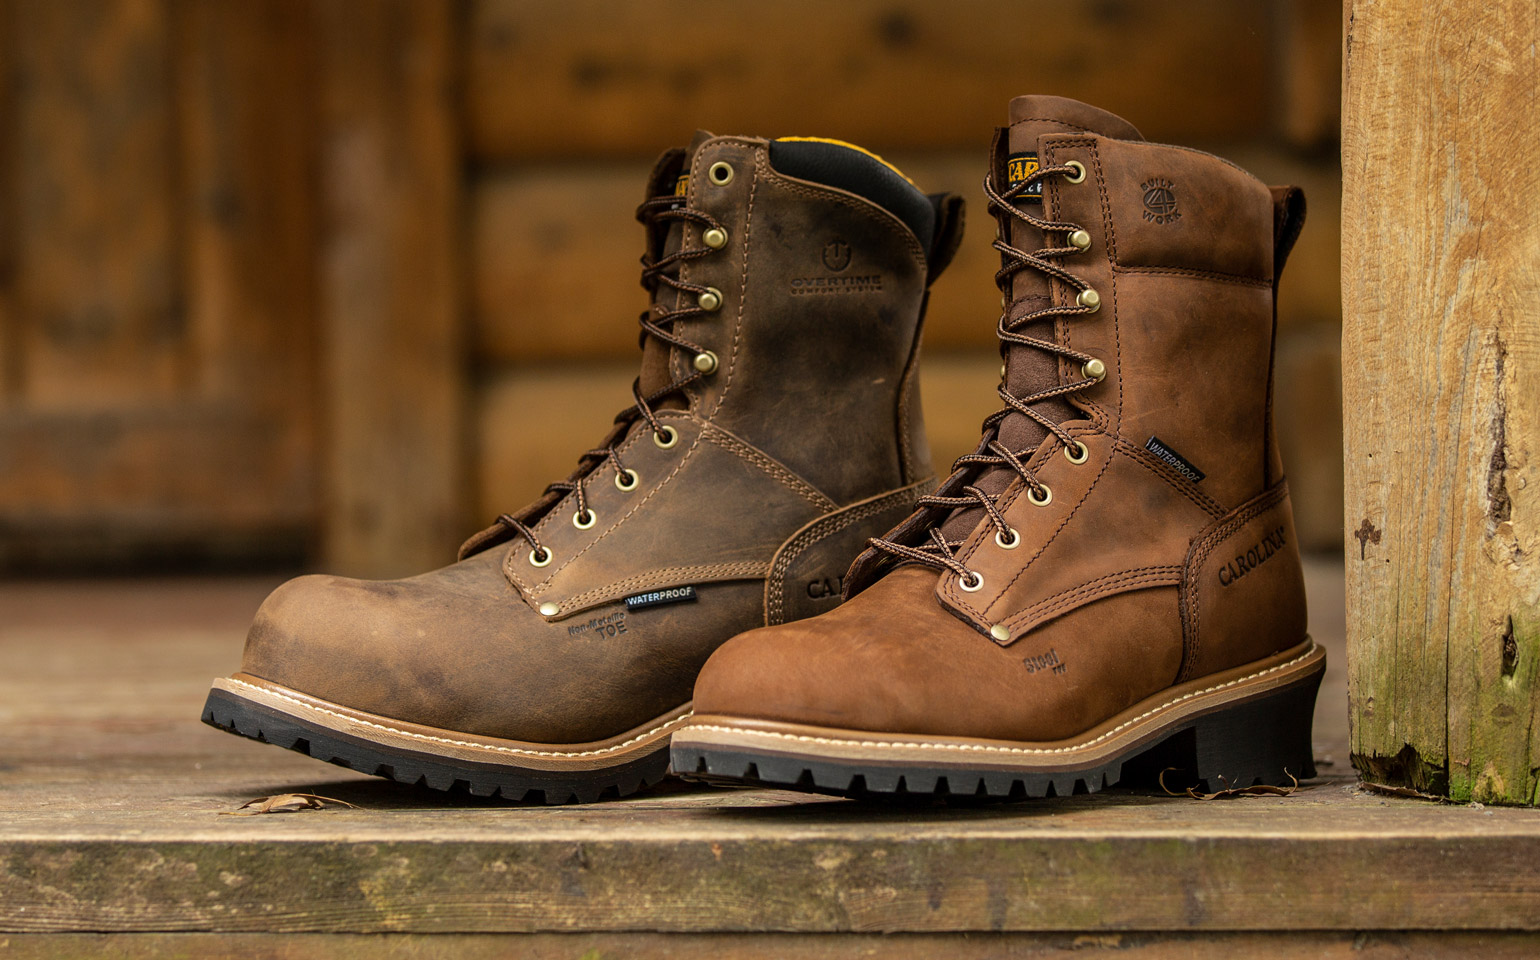 men's logger boots on sale